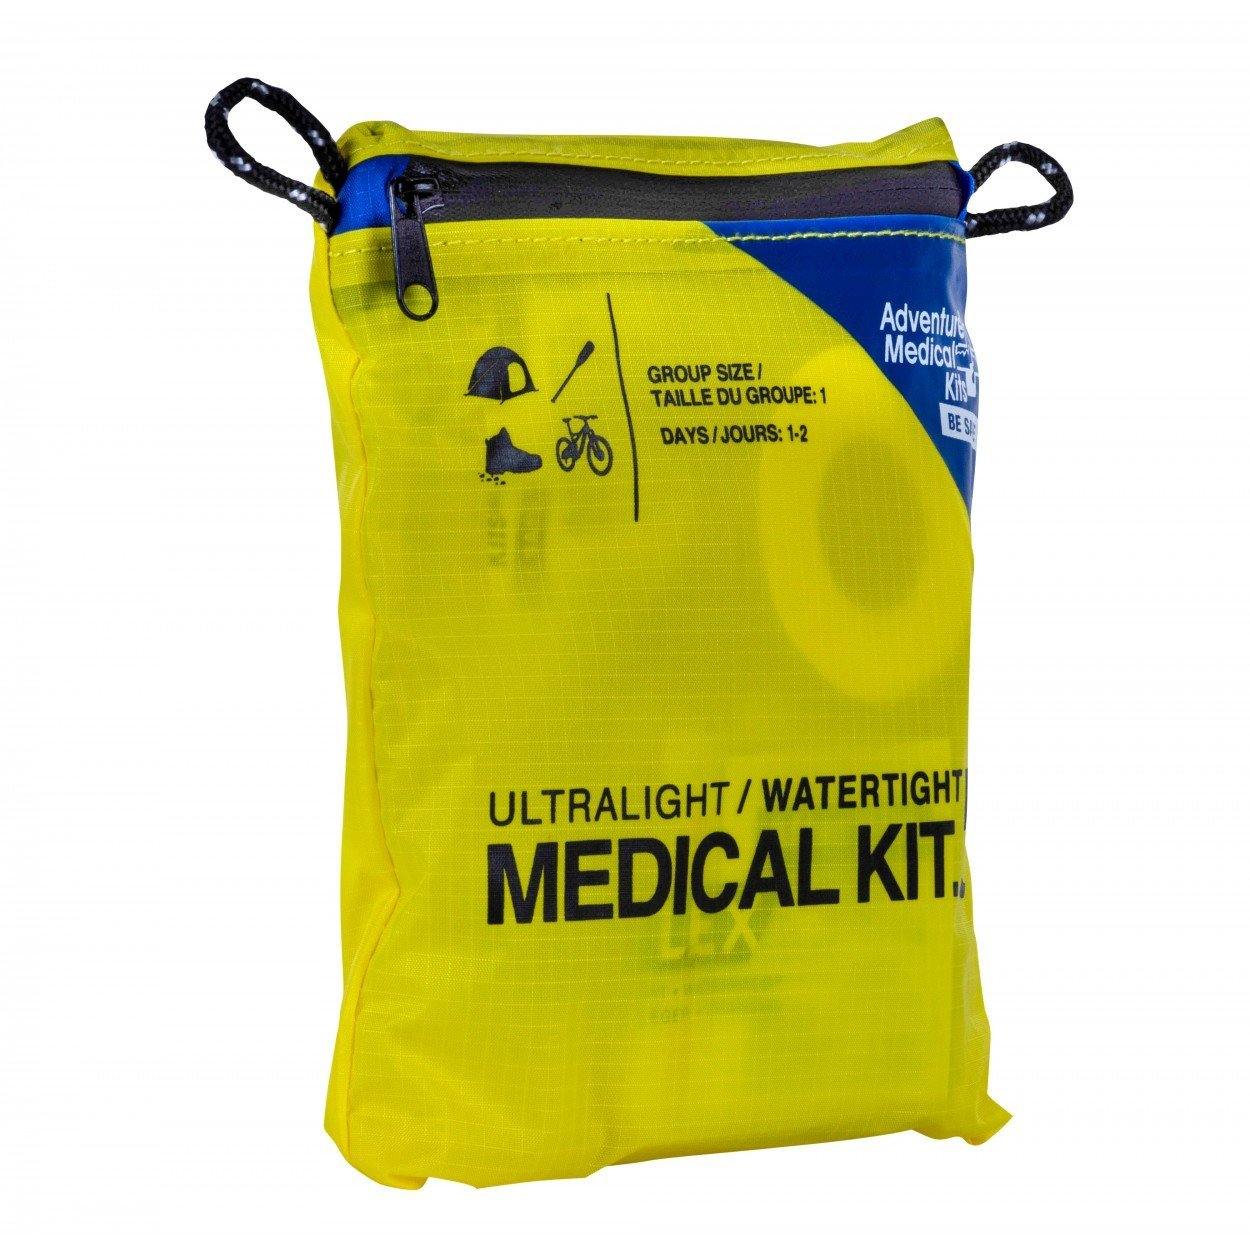 Adventure Medical Kit Ultralight .5 First Aid Kit